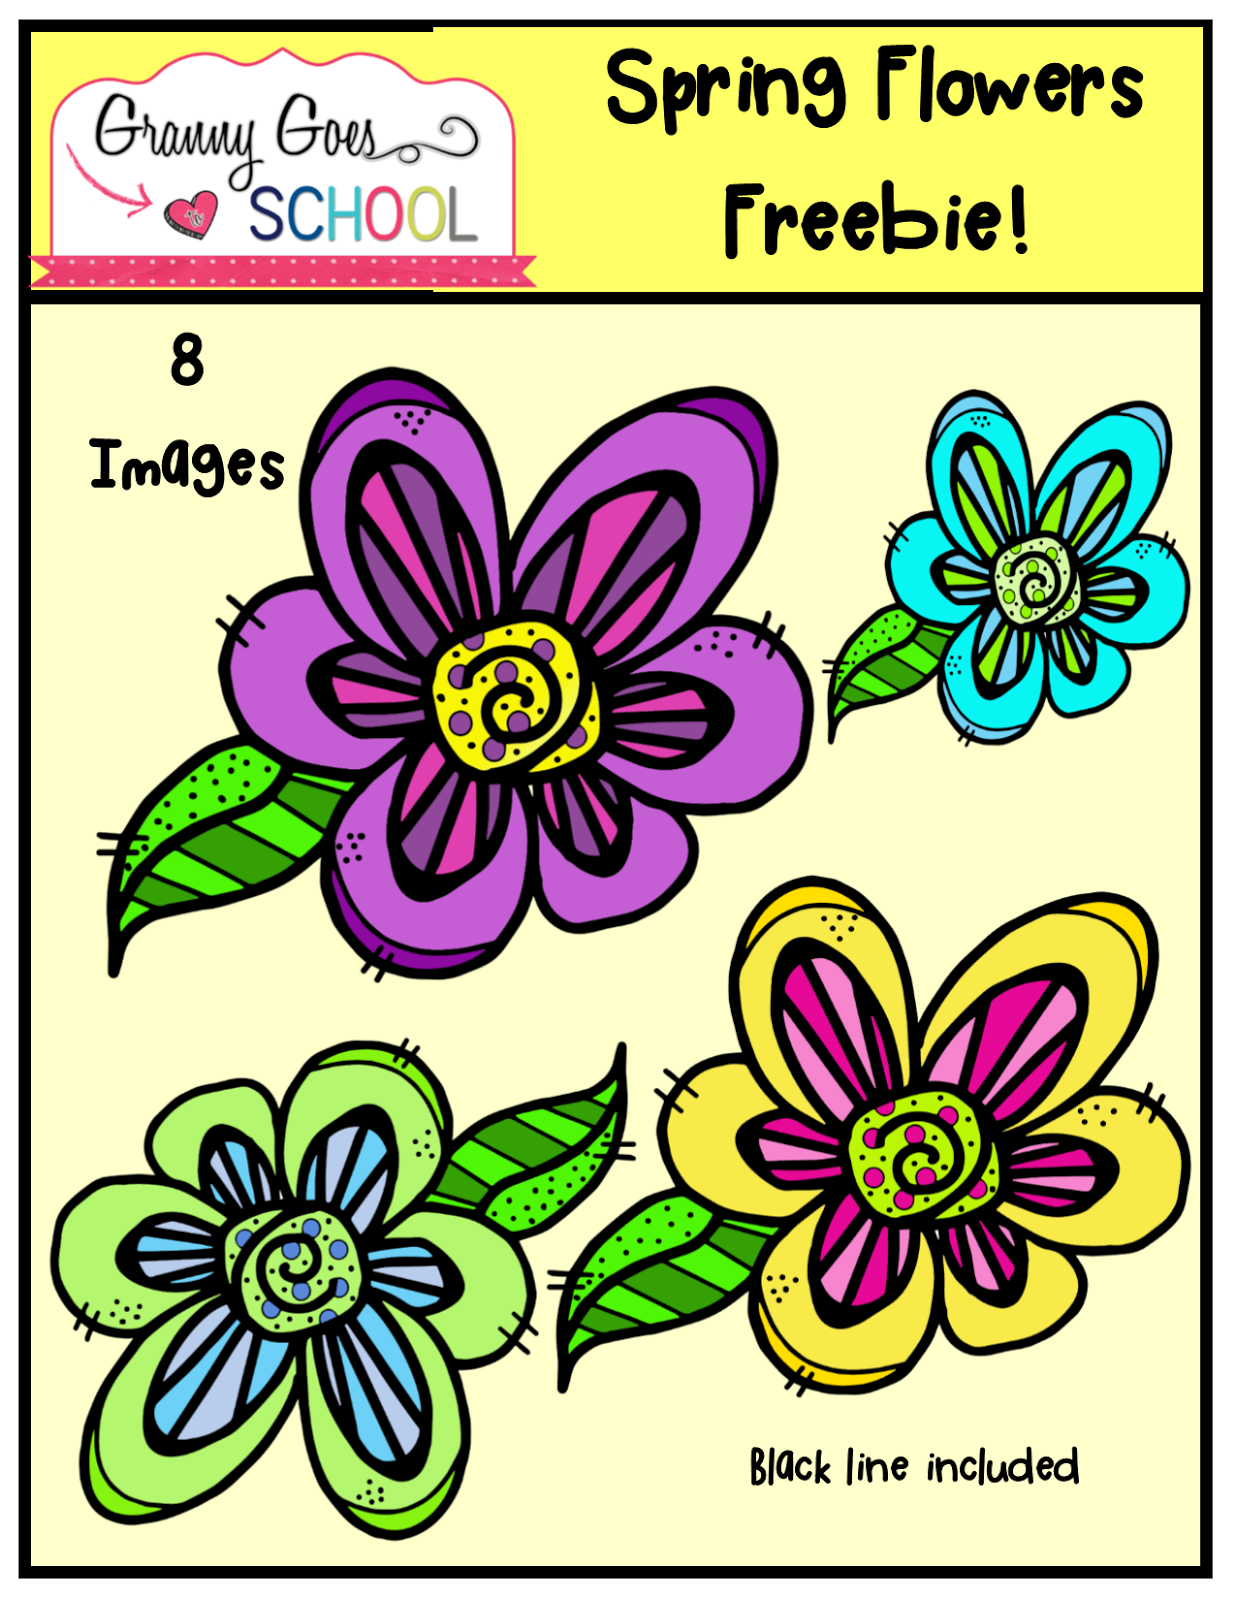 https://www.teacherspayteachers.com/Product/Spring-Flower-Freebie-1776901